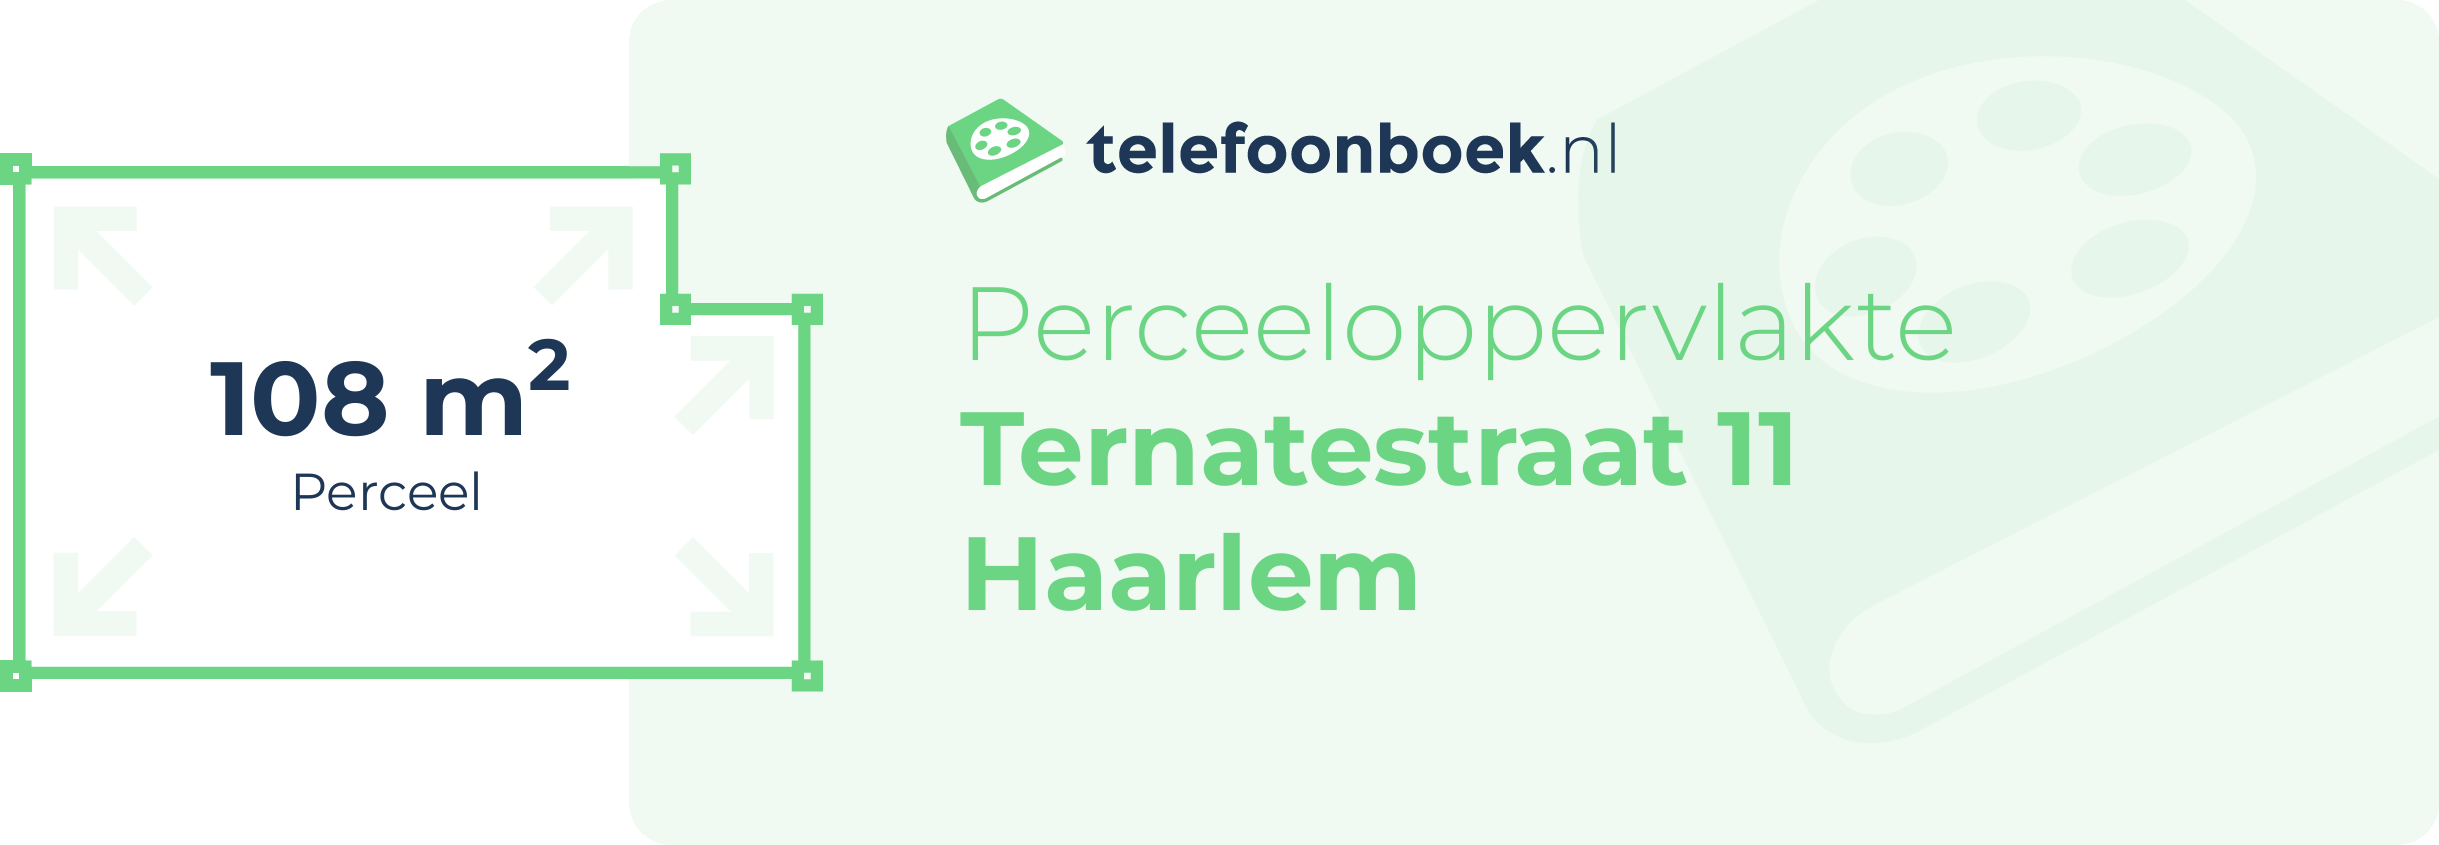 Perceeloppervlakte Ternatestraat 11 Haarlem